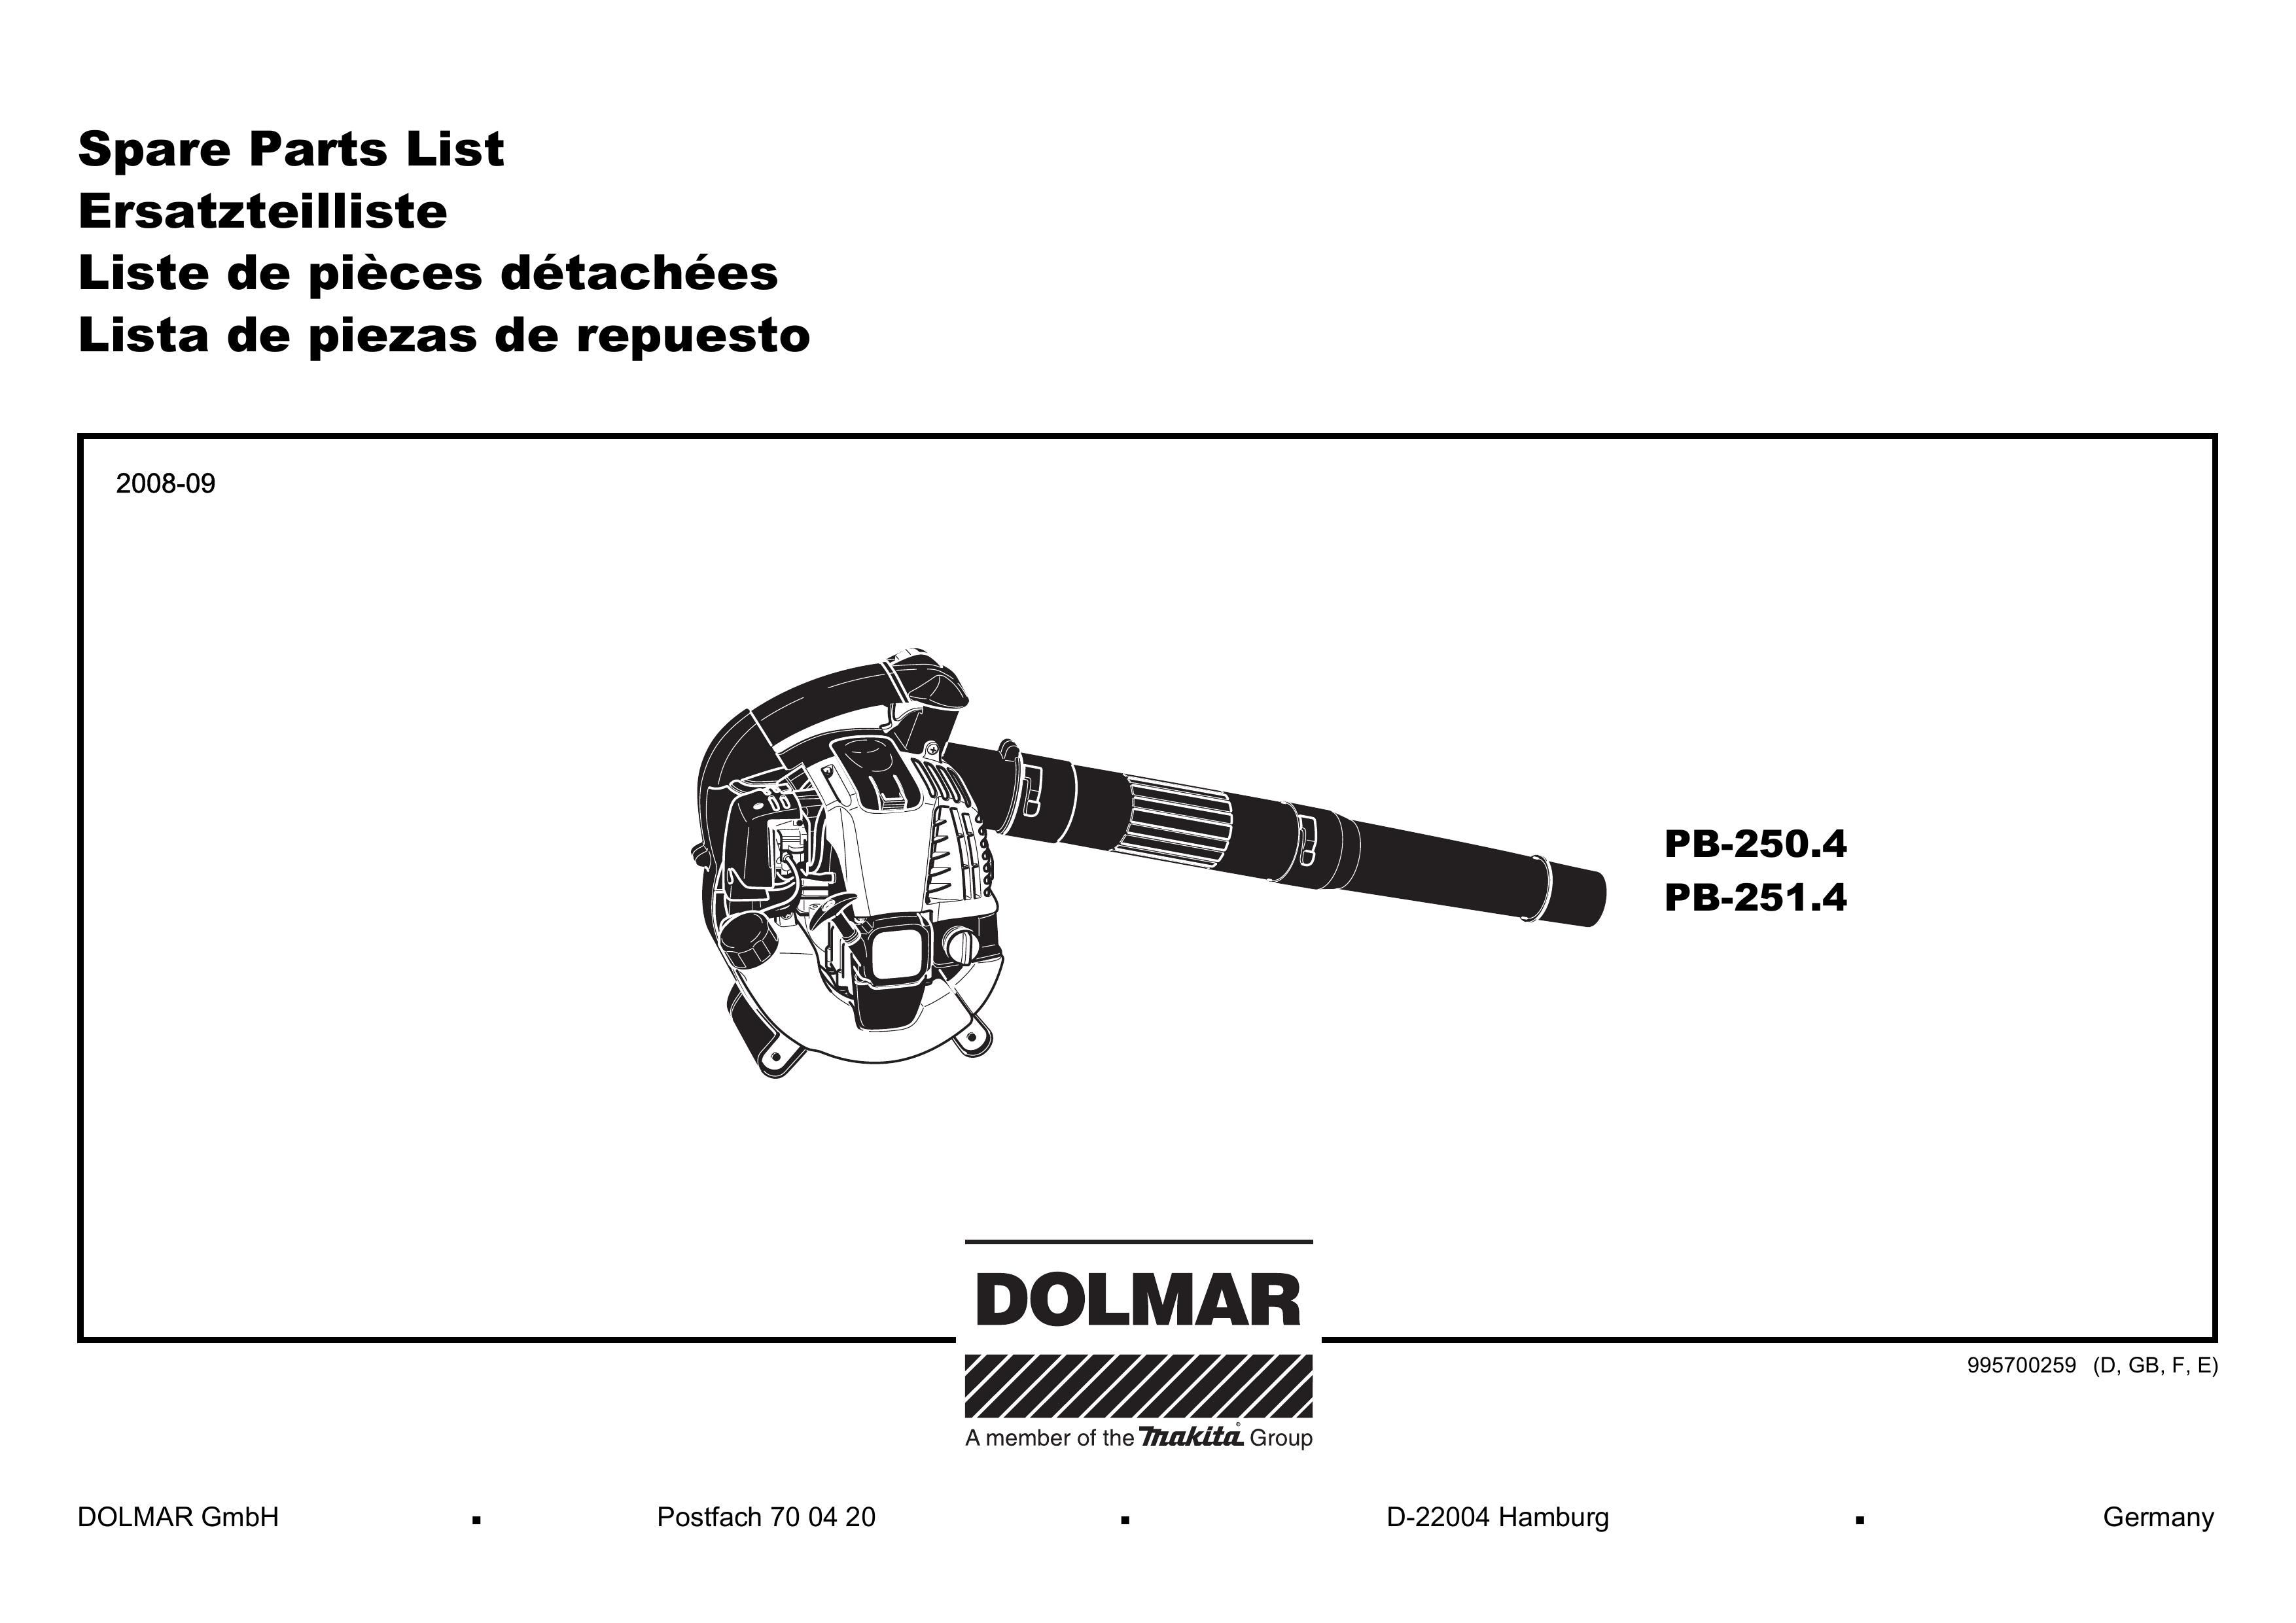 Dolmar PB-251.4 Blower User Manual